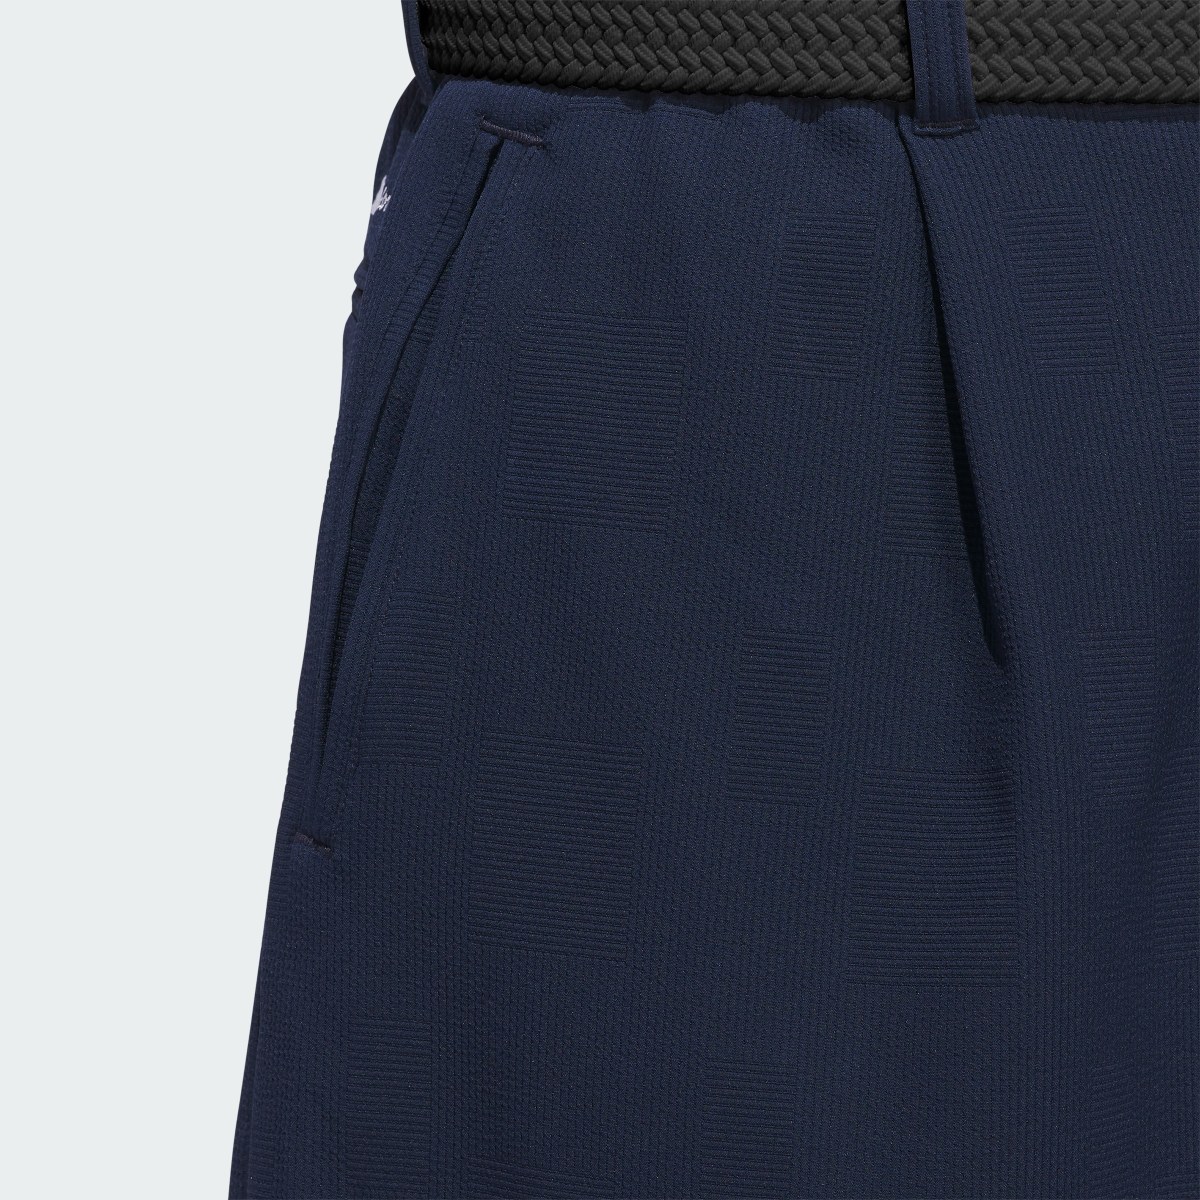 Adidas Malbon Shorts. 7